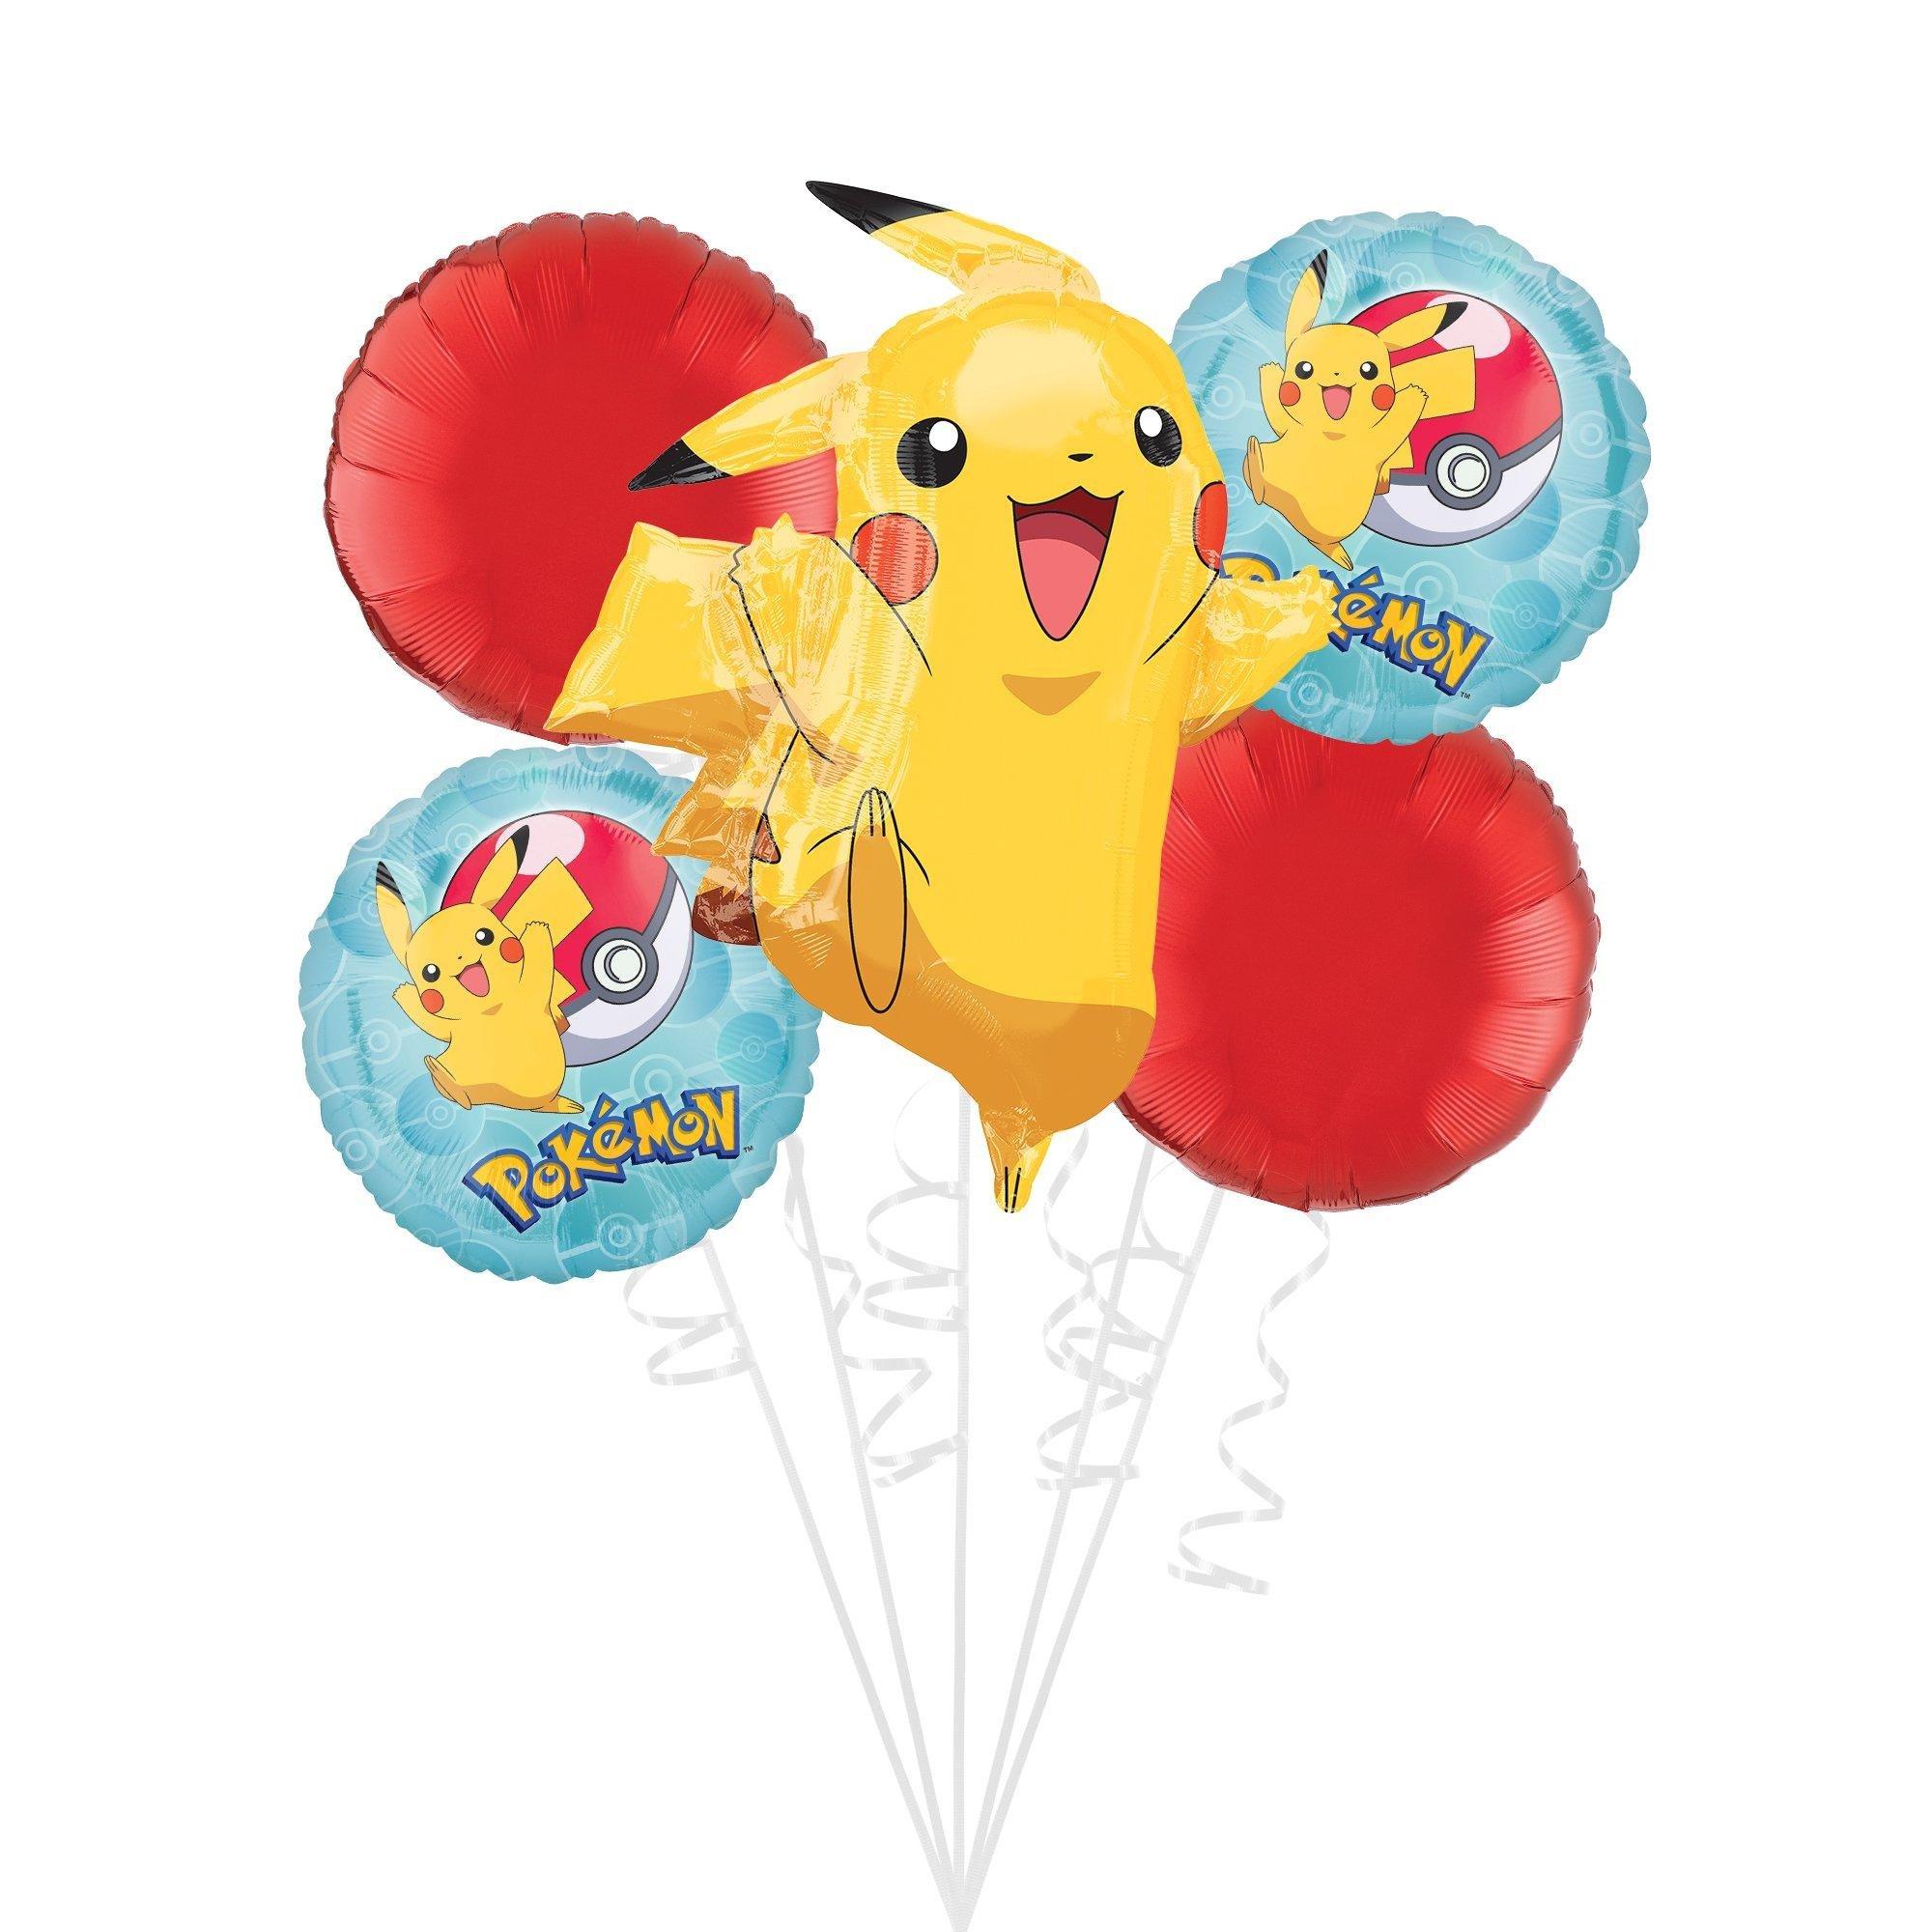 Balloons Bouquet Pikachu #pokemon . . . #fiorespartyballoons #birthday  #fortmyers #balloonlover #decorations #balloondecor #globos…